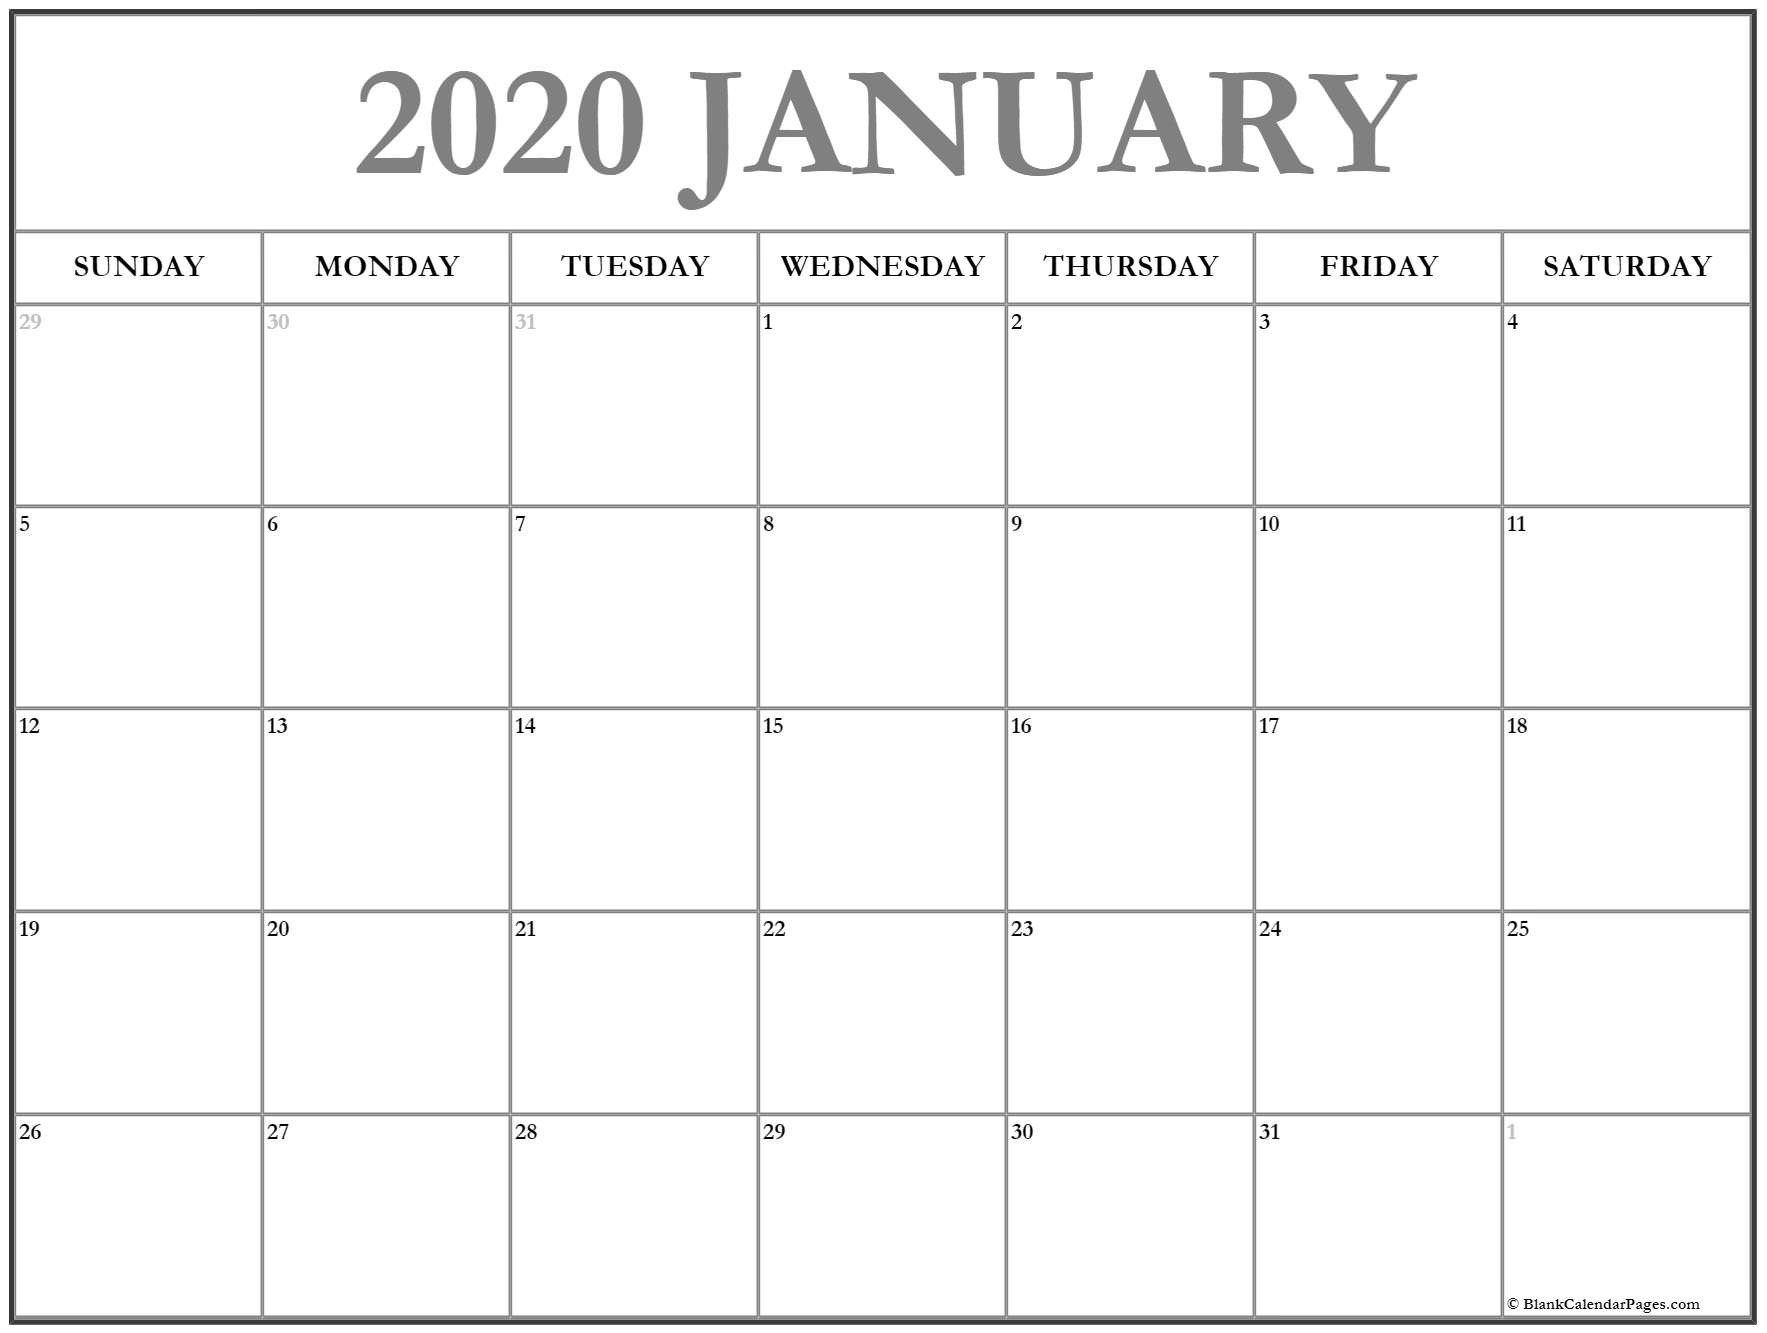 January 2020 Calendar | Free Printable Monthly Calendars-Free January 2020 Calendar Template